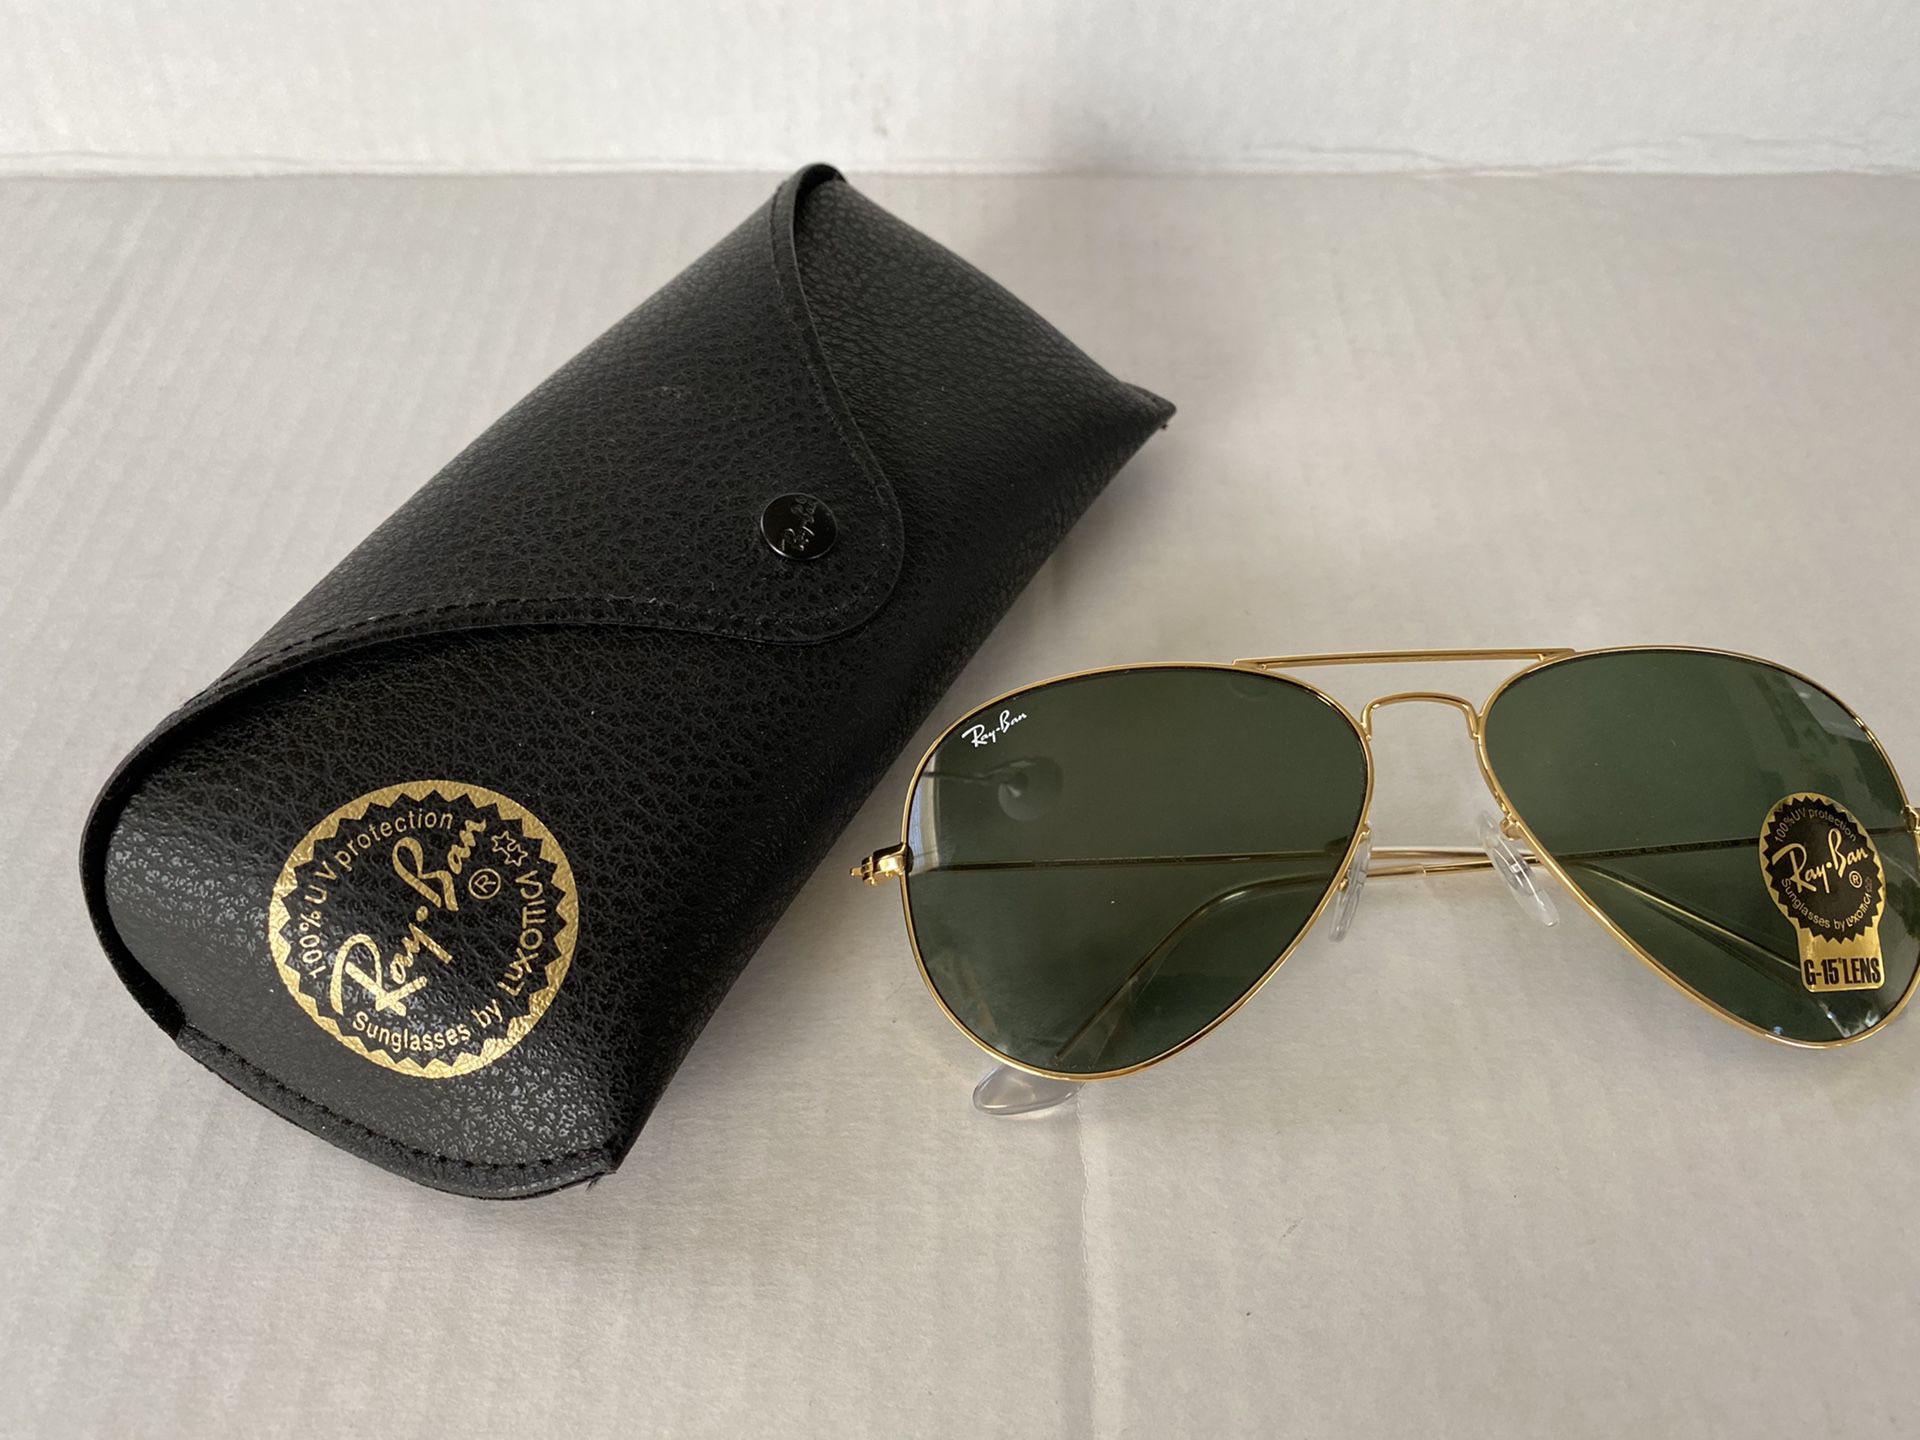 Ray-Ban Aviator RB 3025 L0205 Classic Gold G15 Green Lens Sunglasses 58mm